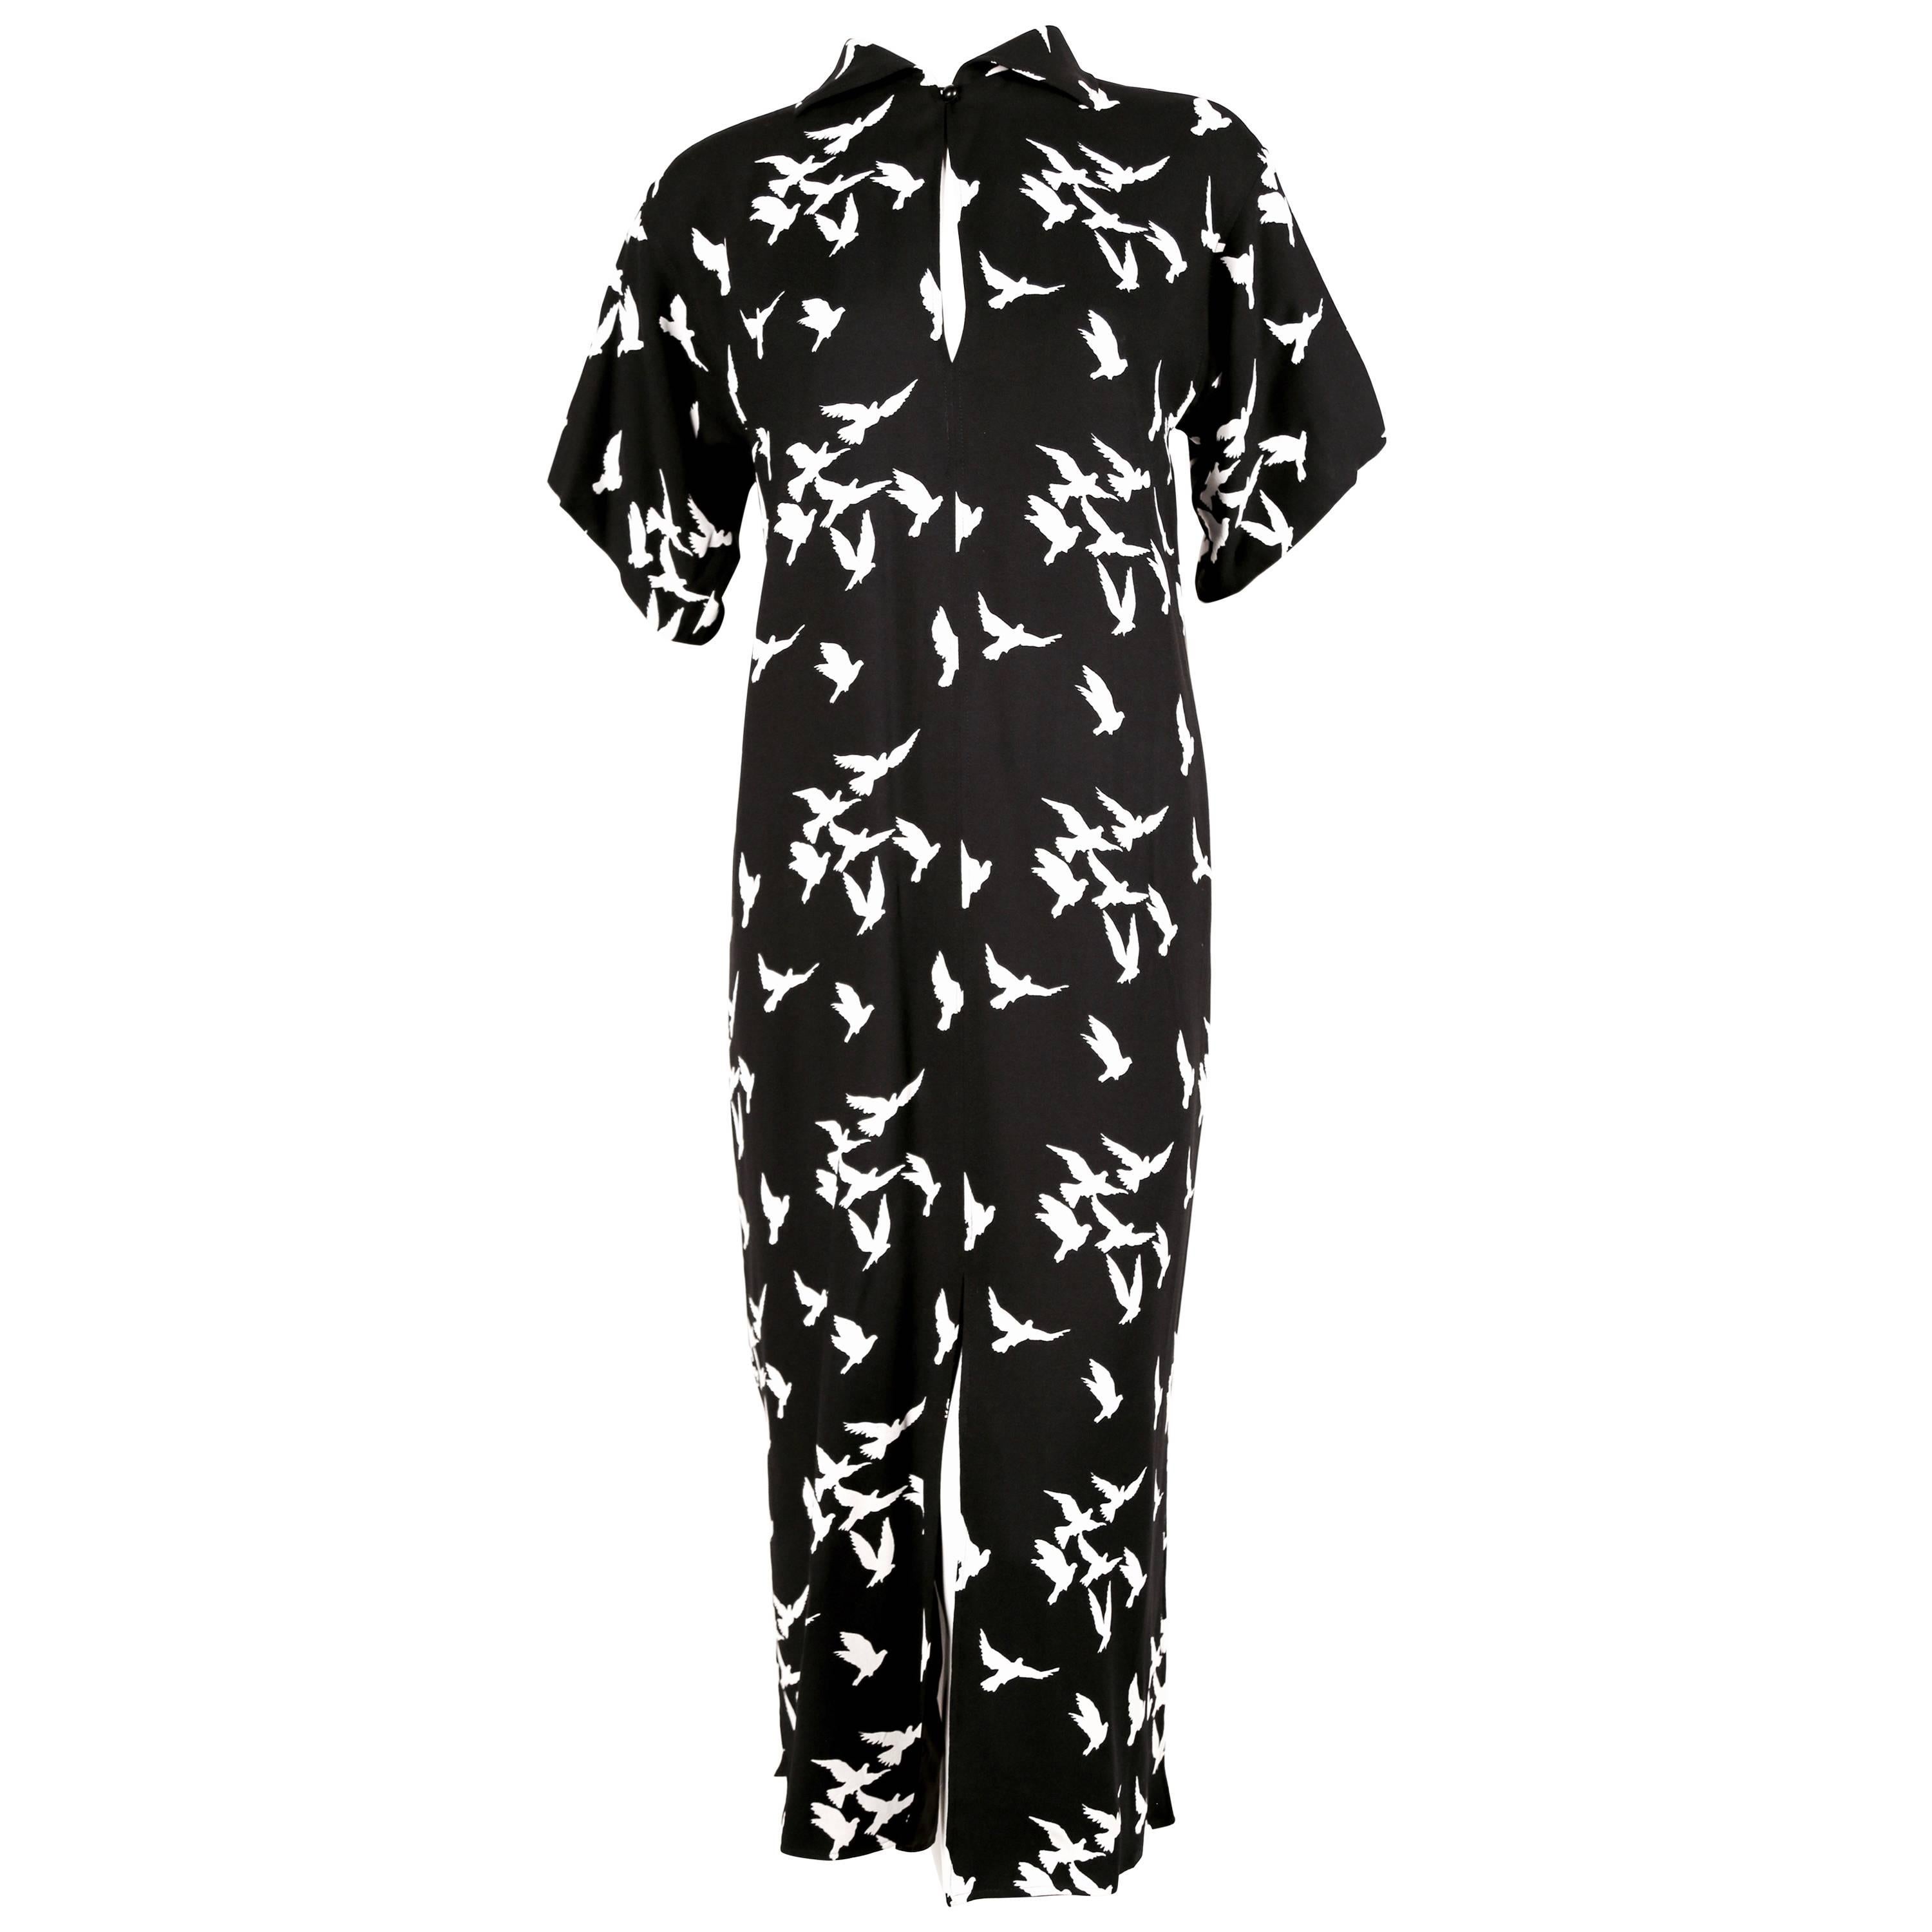 1978 YVES SAINT LAURENT black crepe dress with bird print For Sale